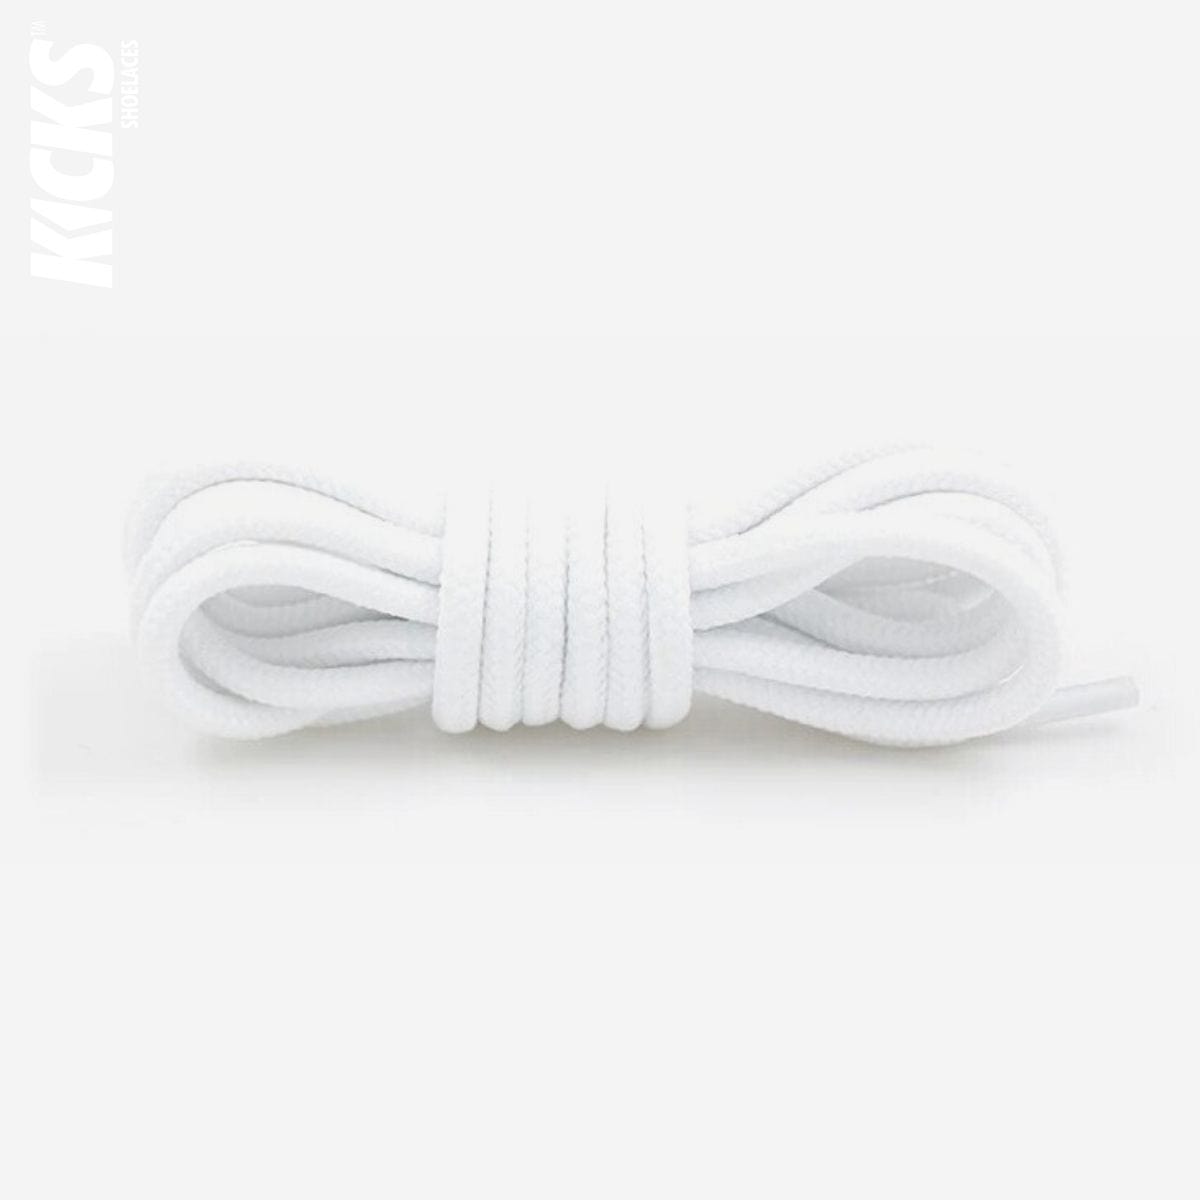 Nike Air Max 98 Replacement Shoelaces - Kicks Shoelaces